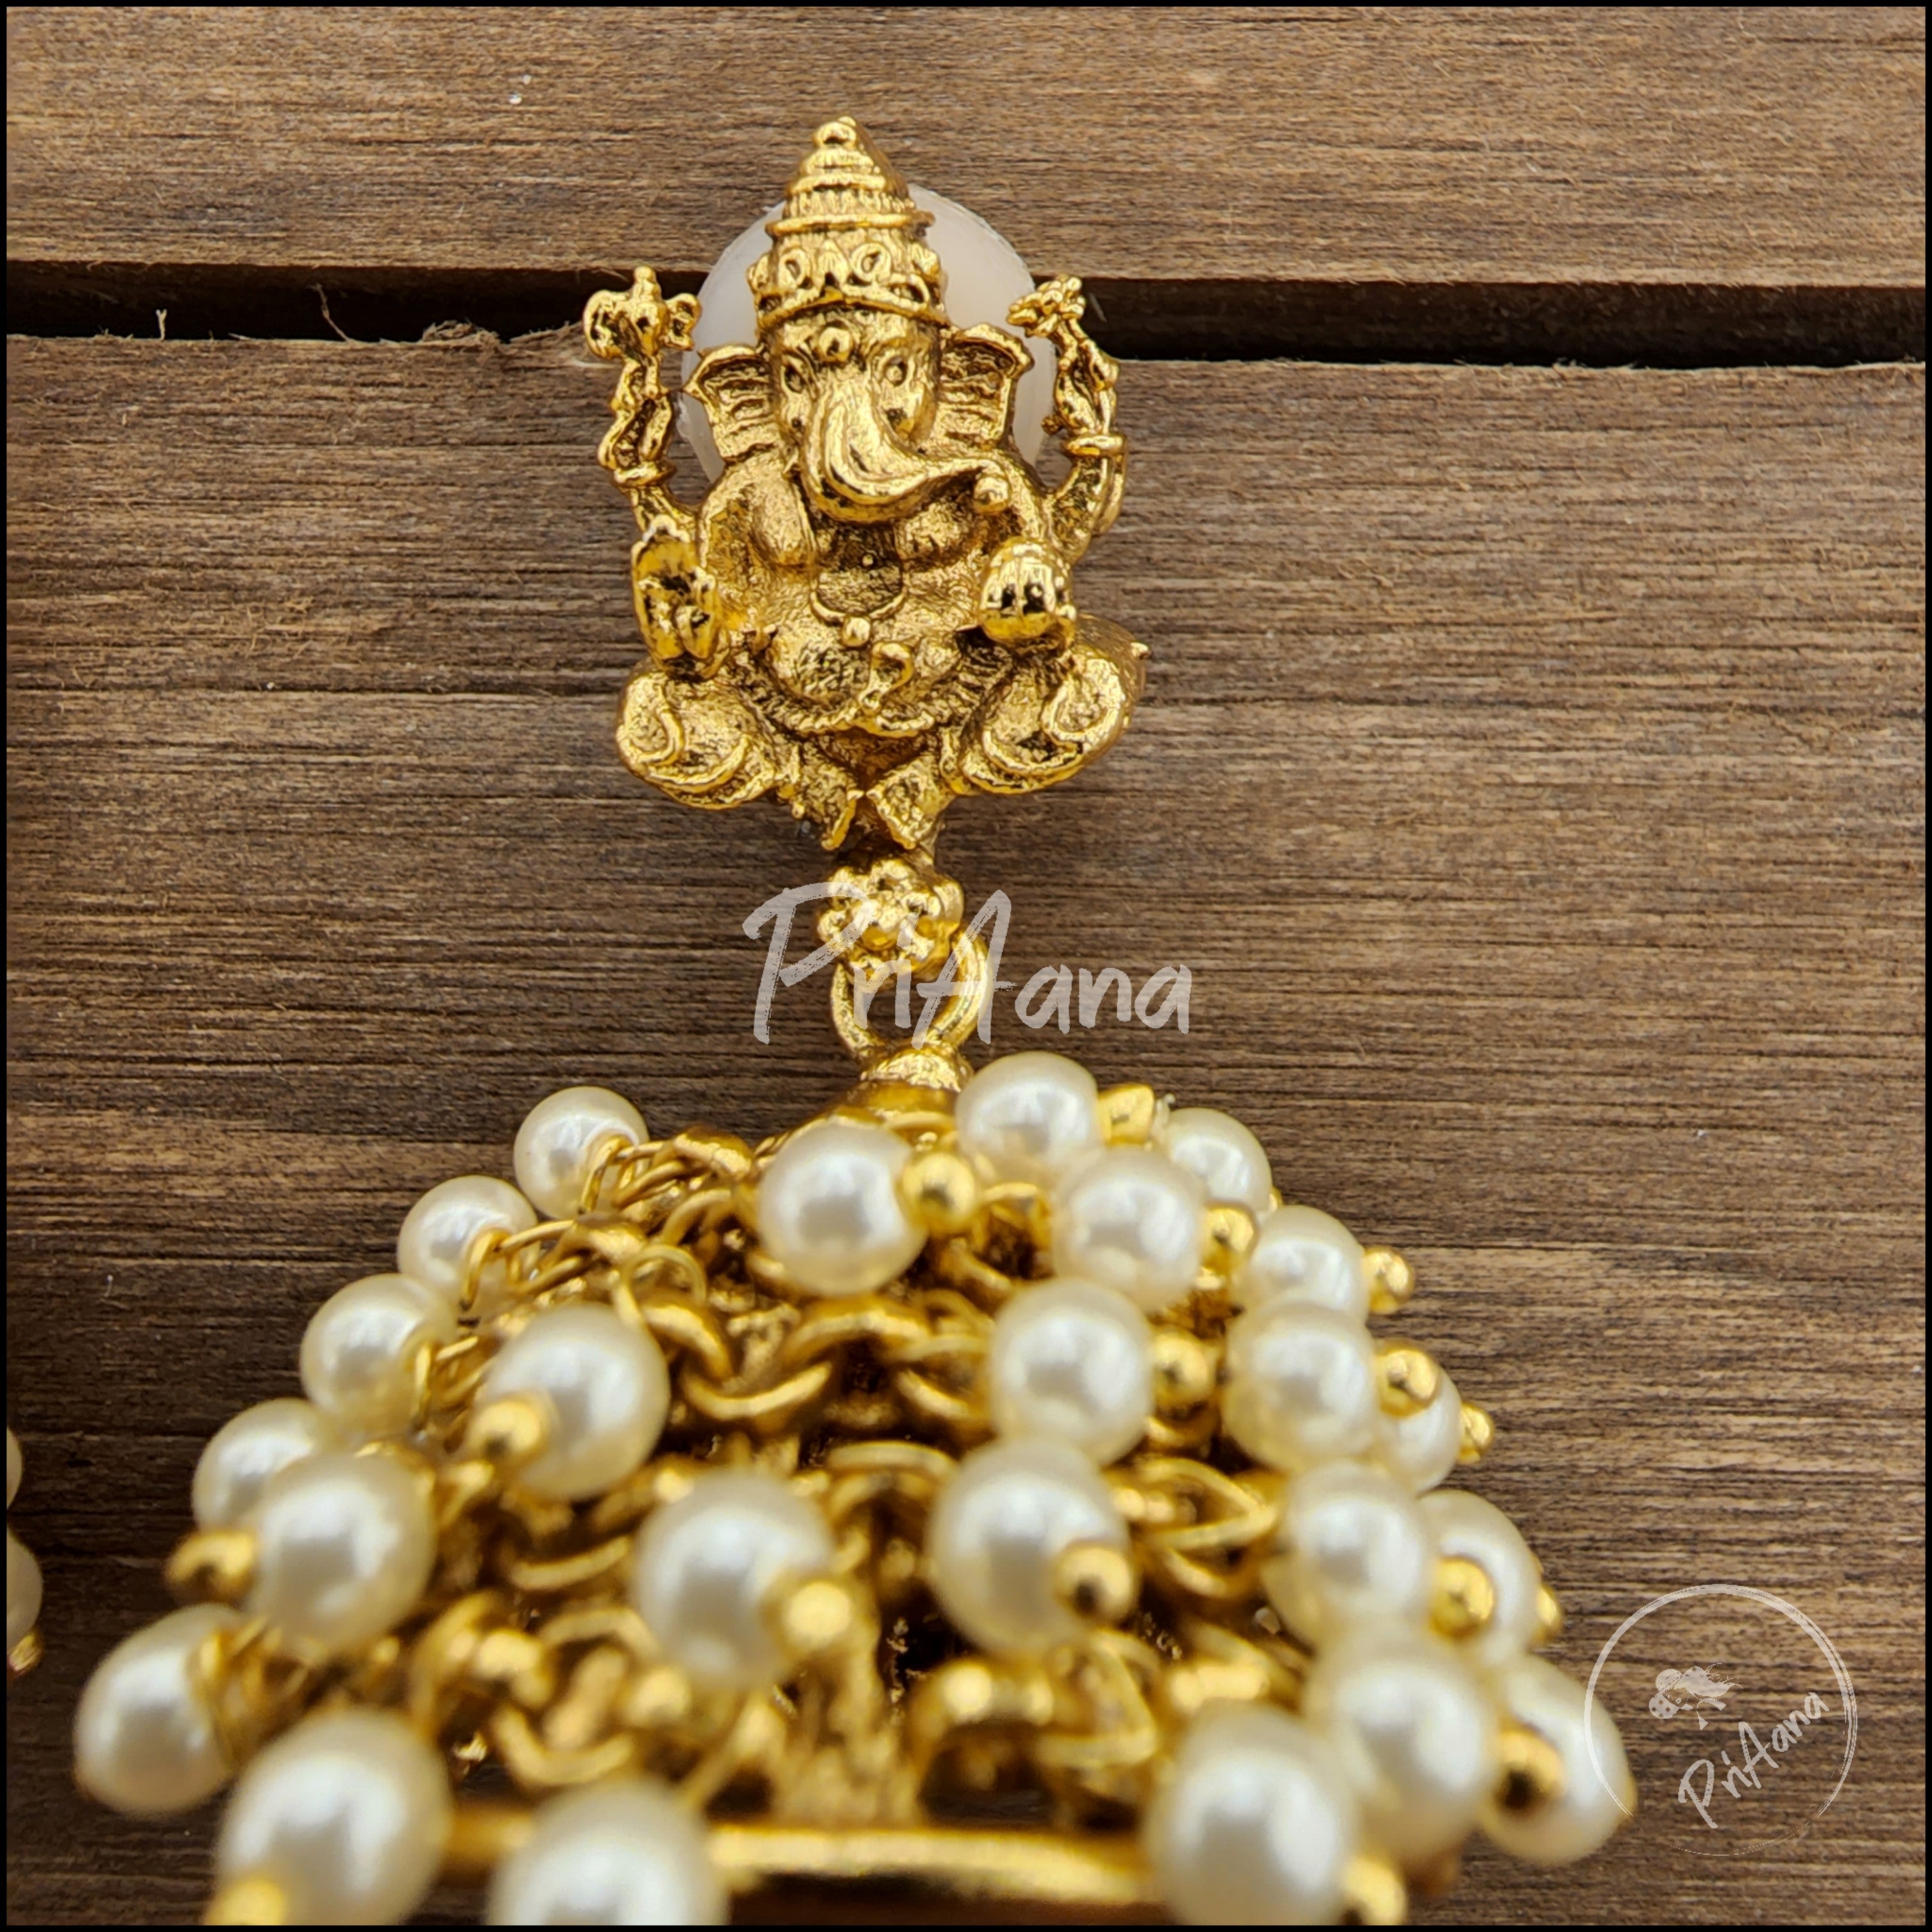 Bavishya Temple Jewelry Metal Necklace Set